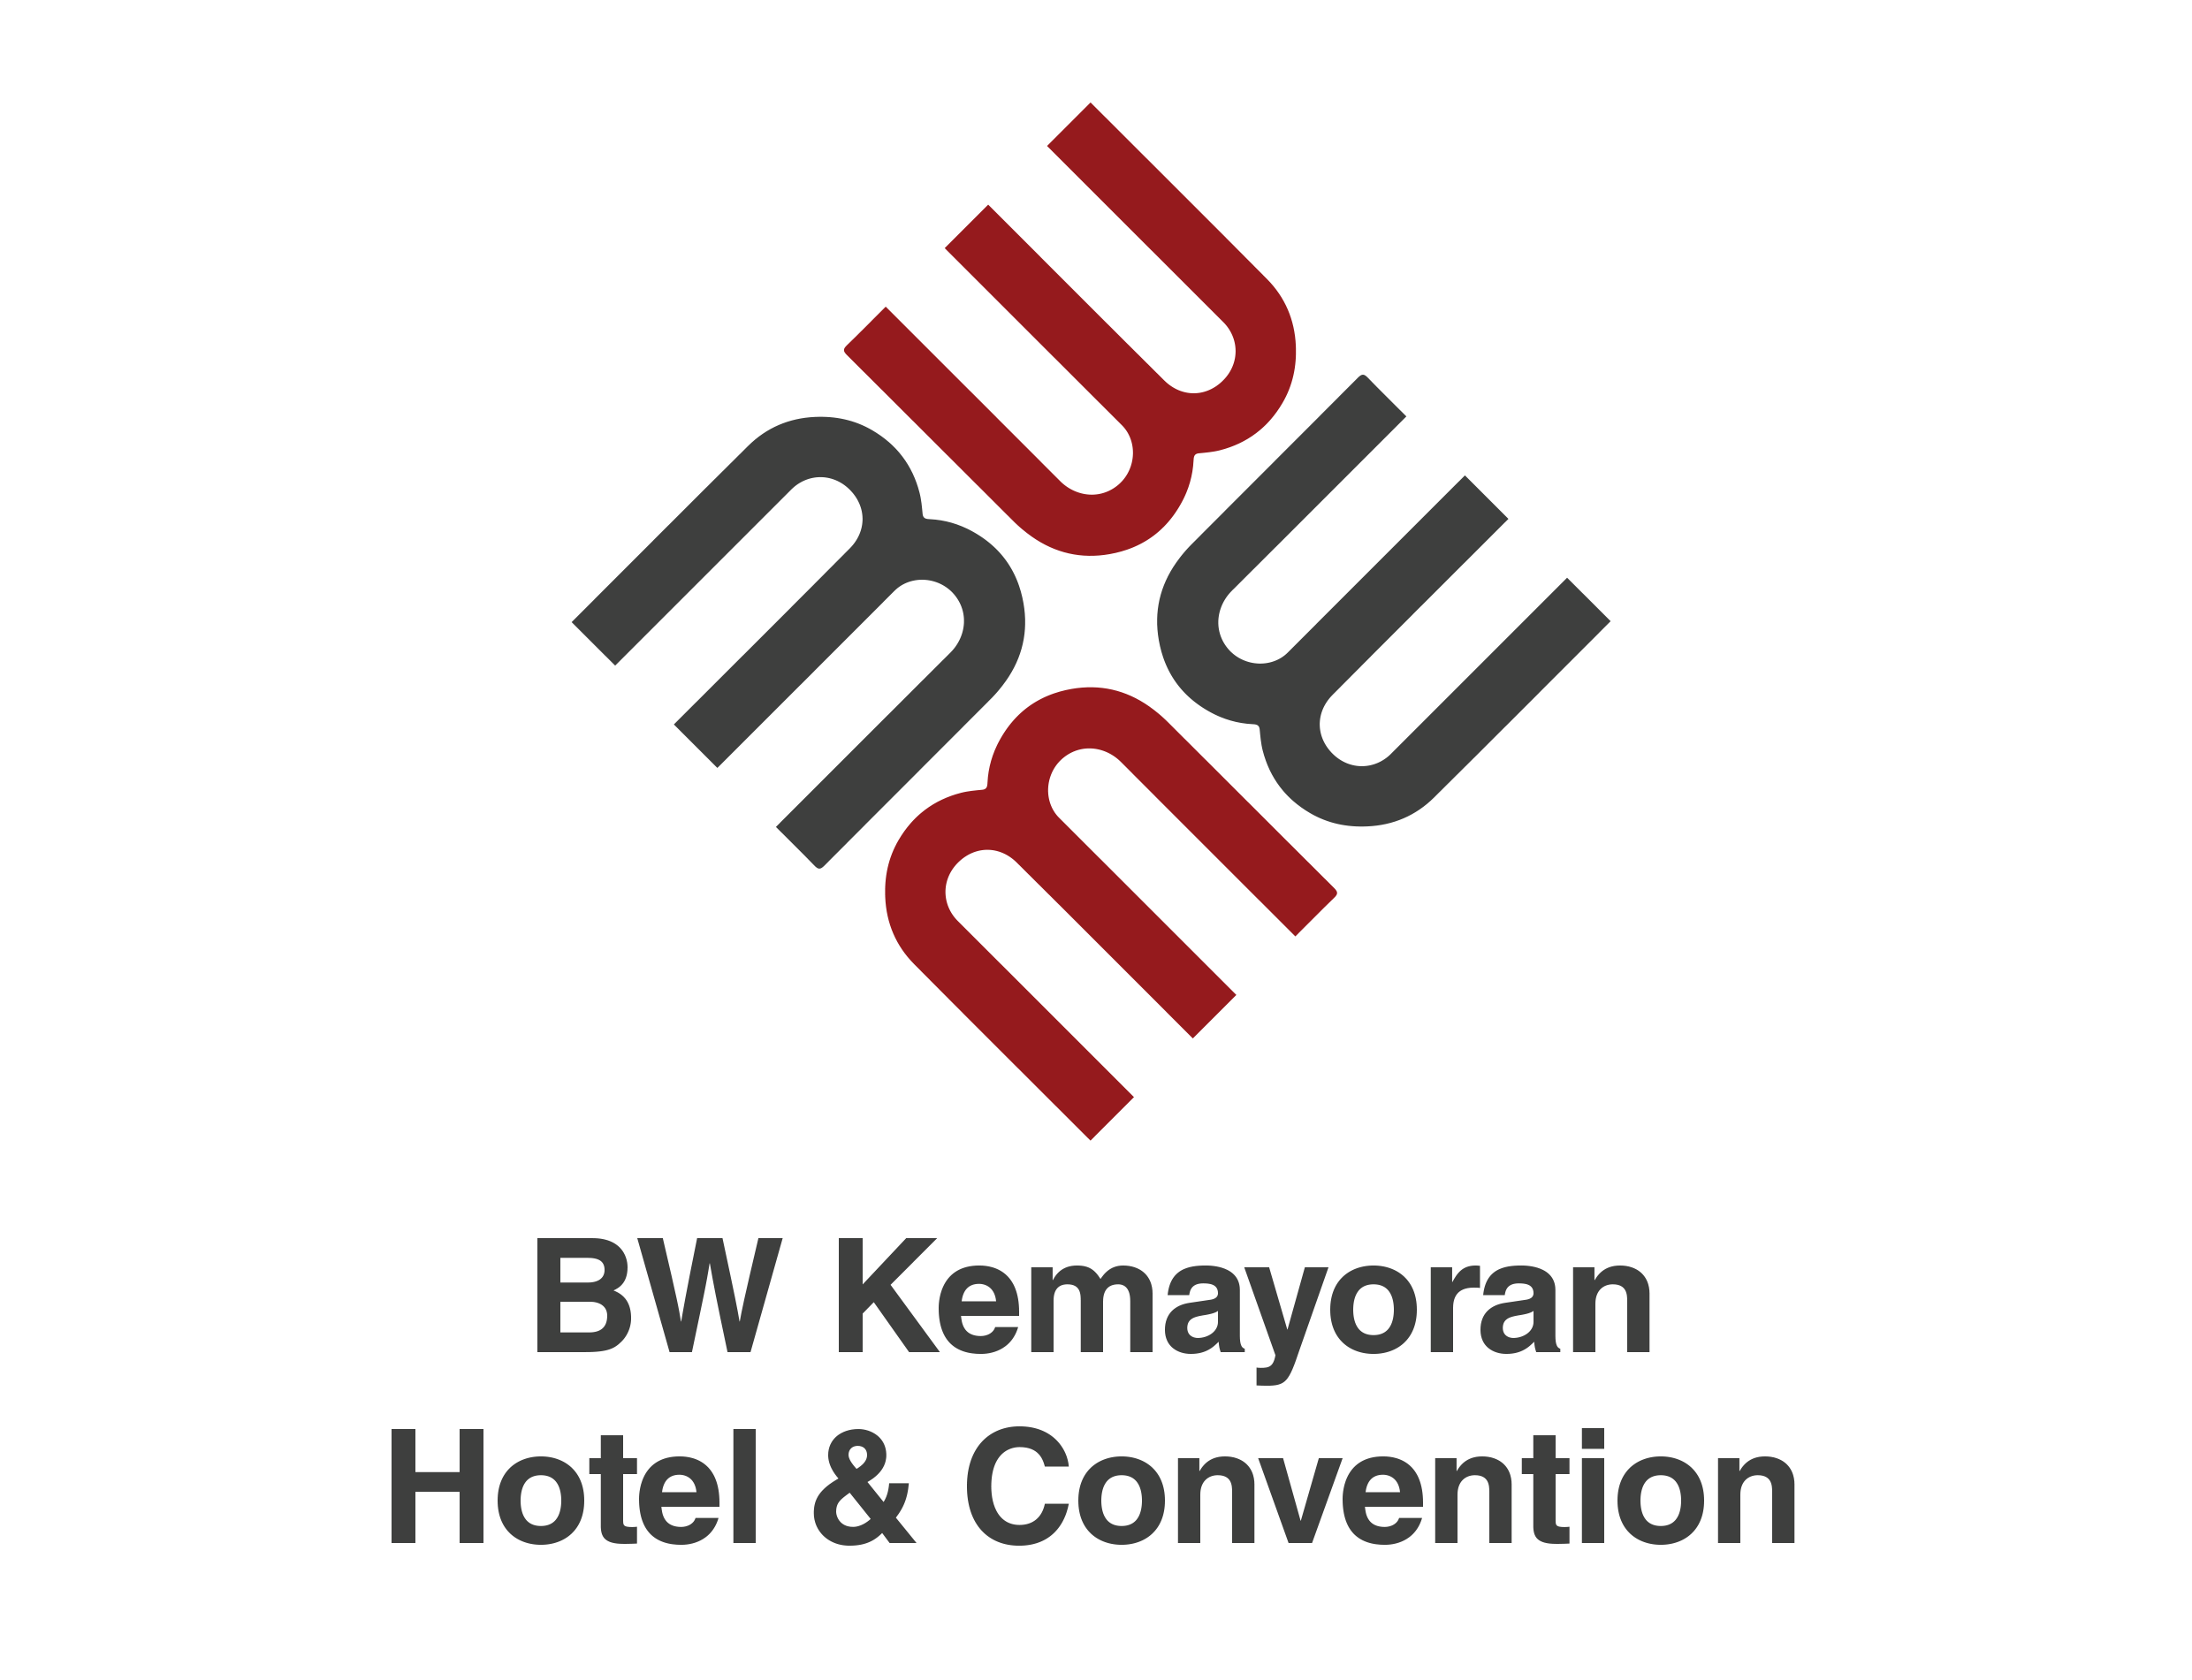 BW Kemayoran Hotel & Convention